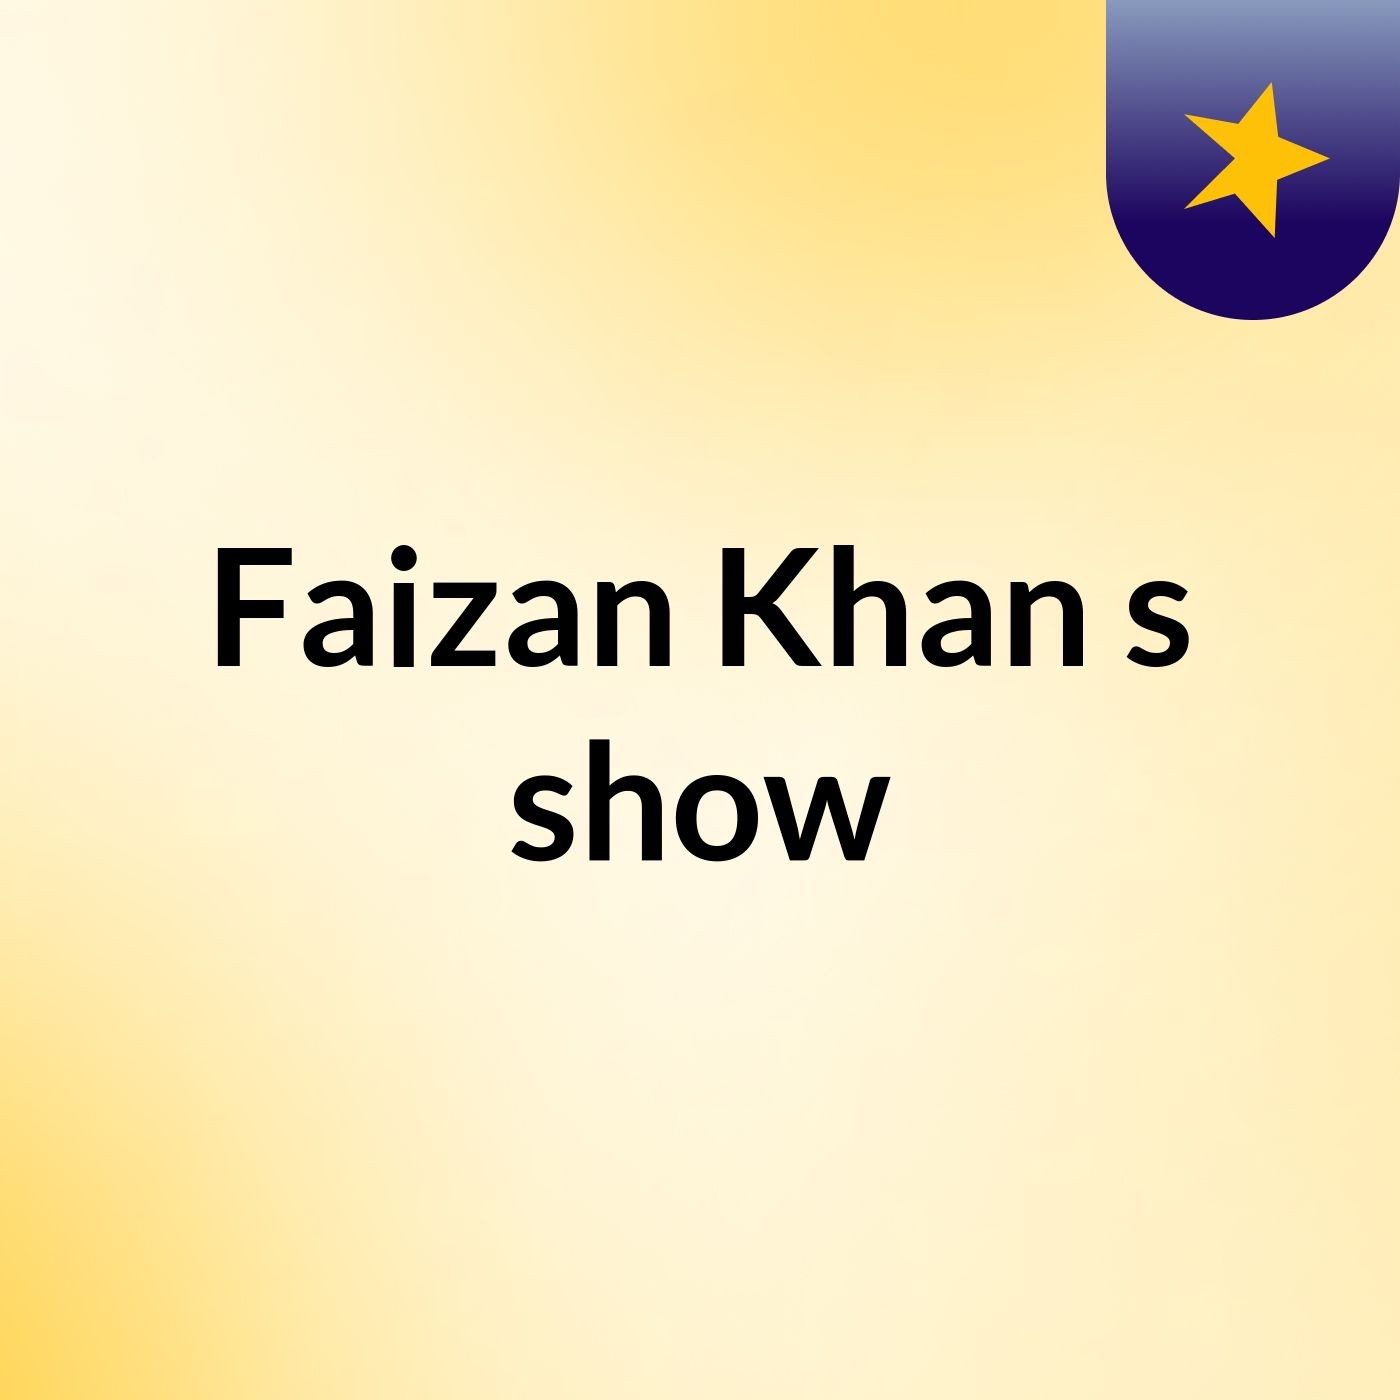 Faizan Khan's show